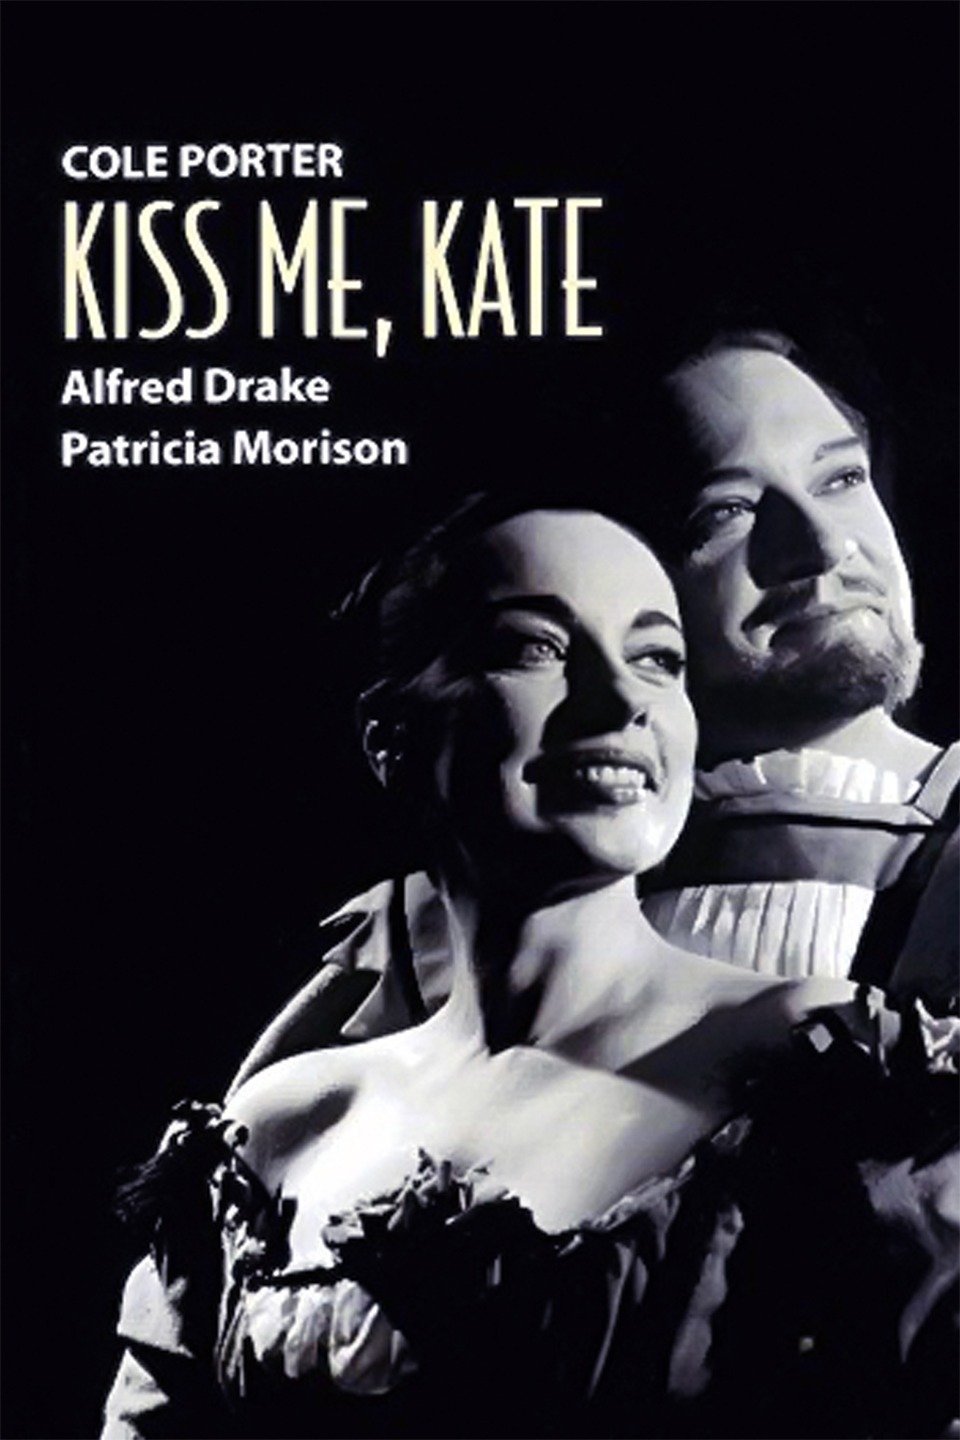 kiss me kate movie review